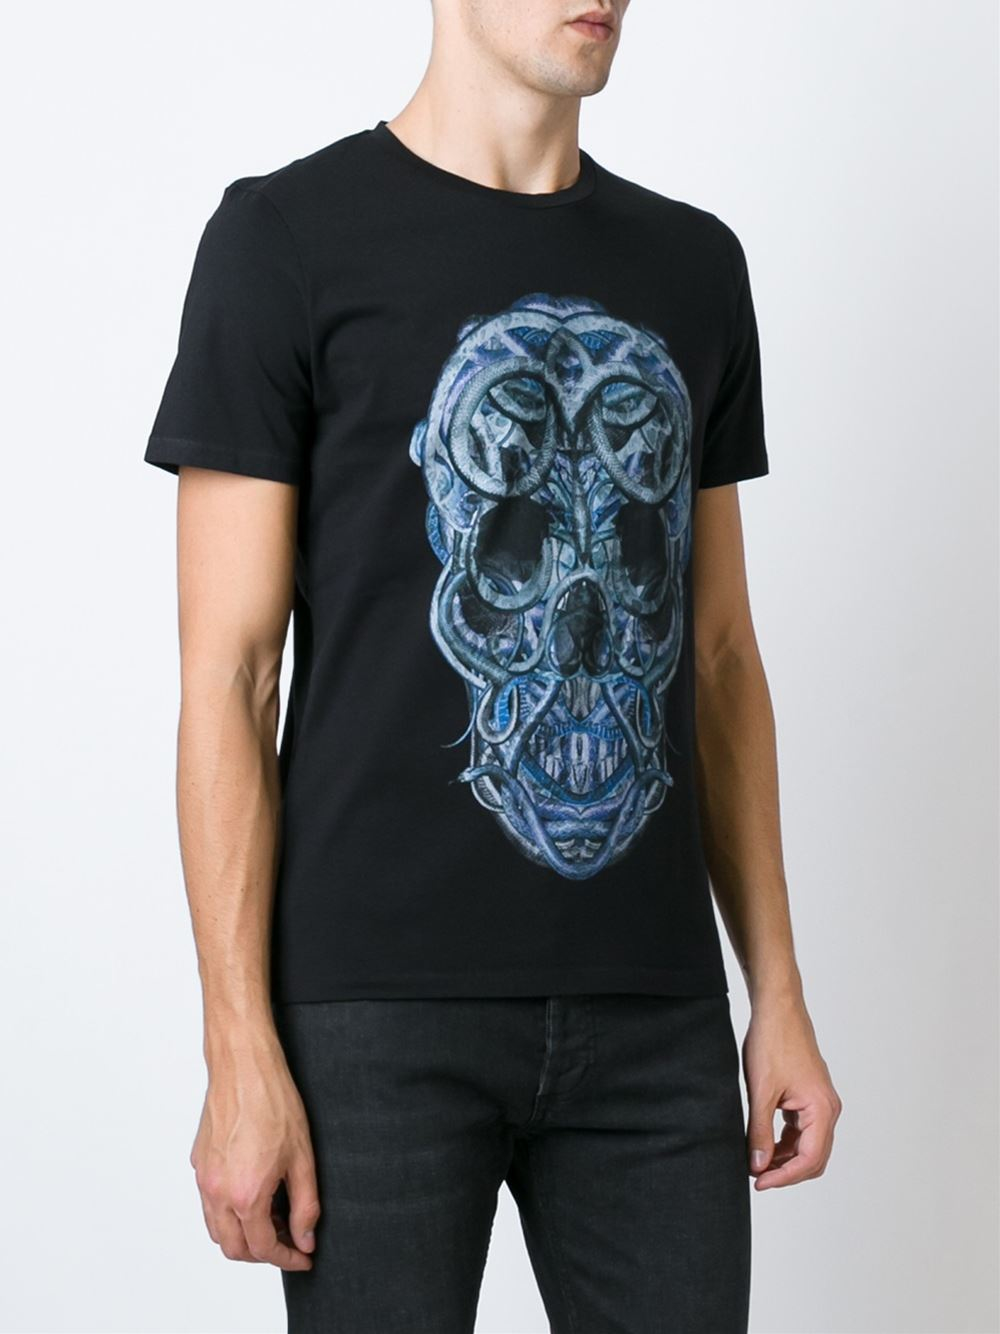 Just Cavalli Skull Print T-shirt in Black for Men - Lyst